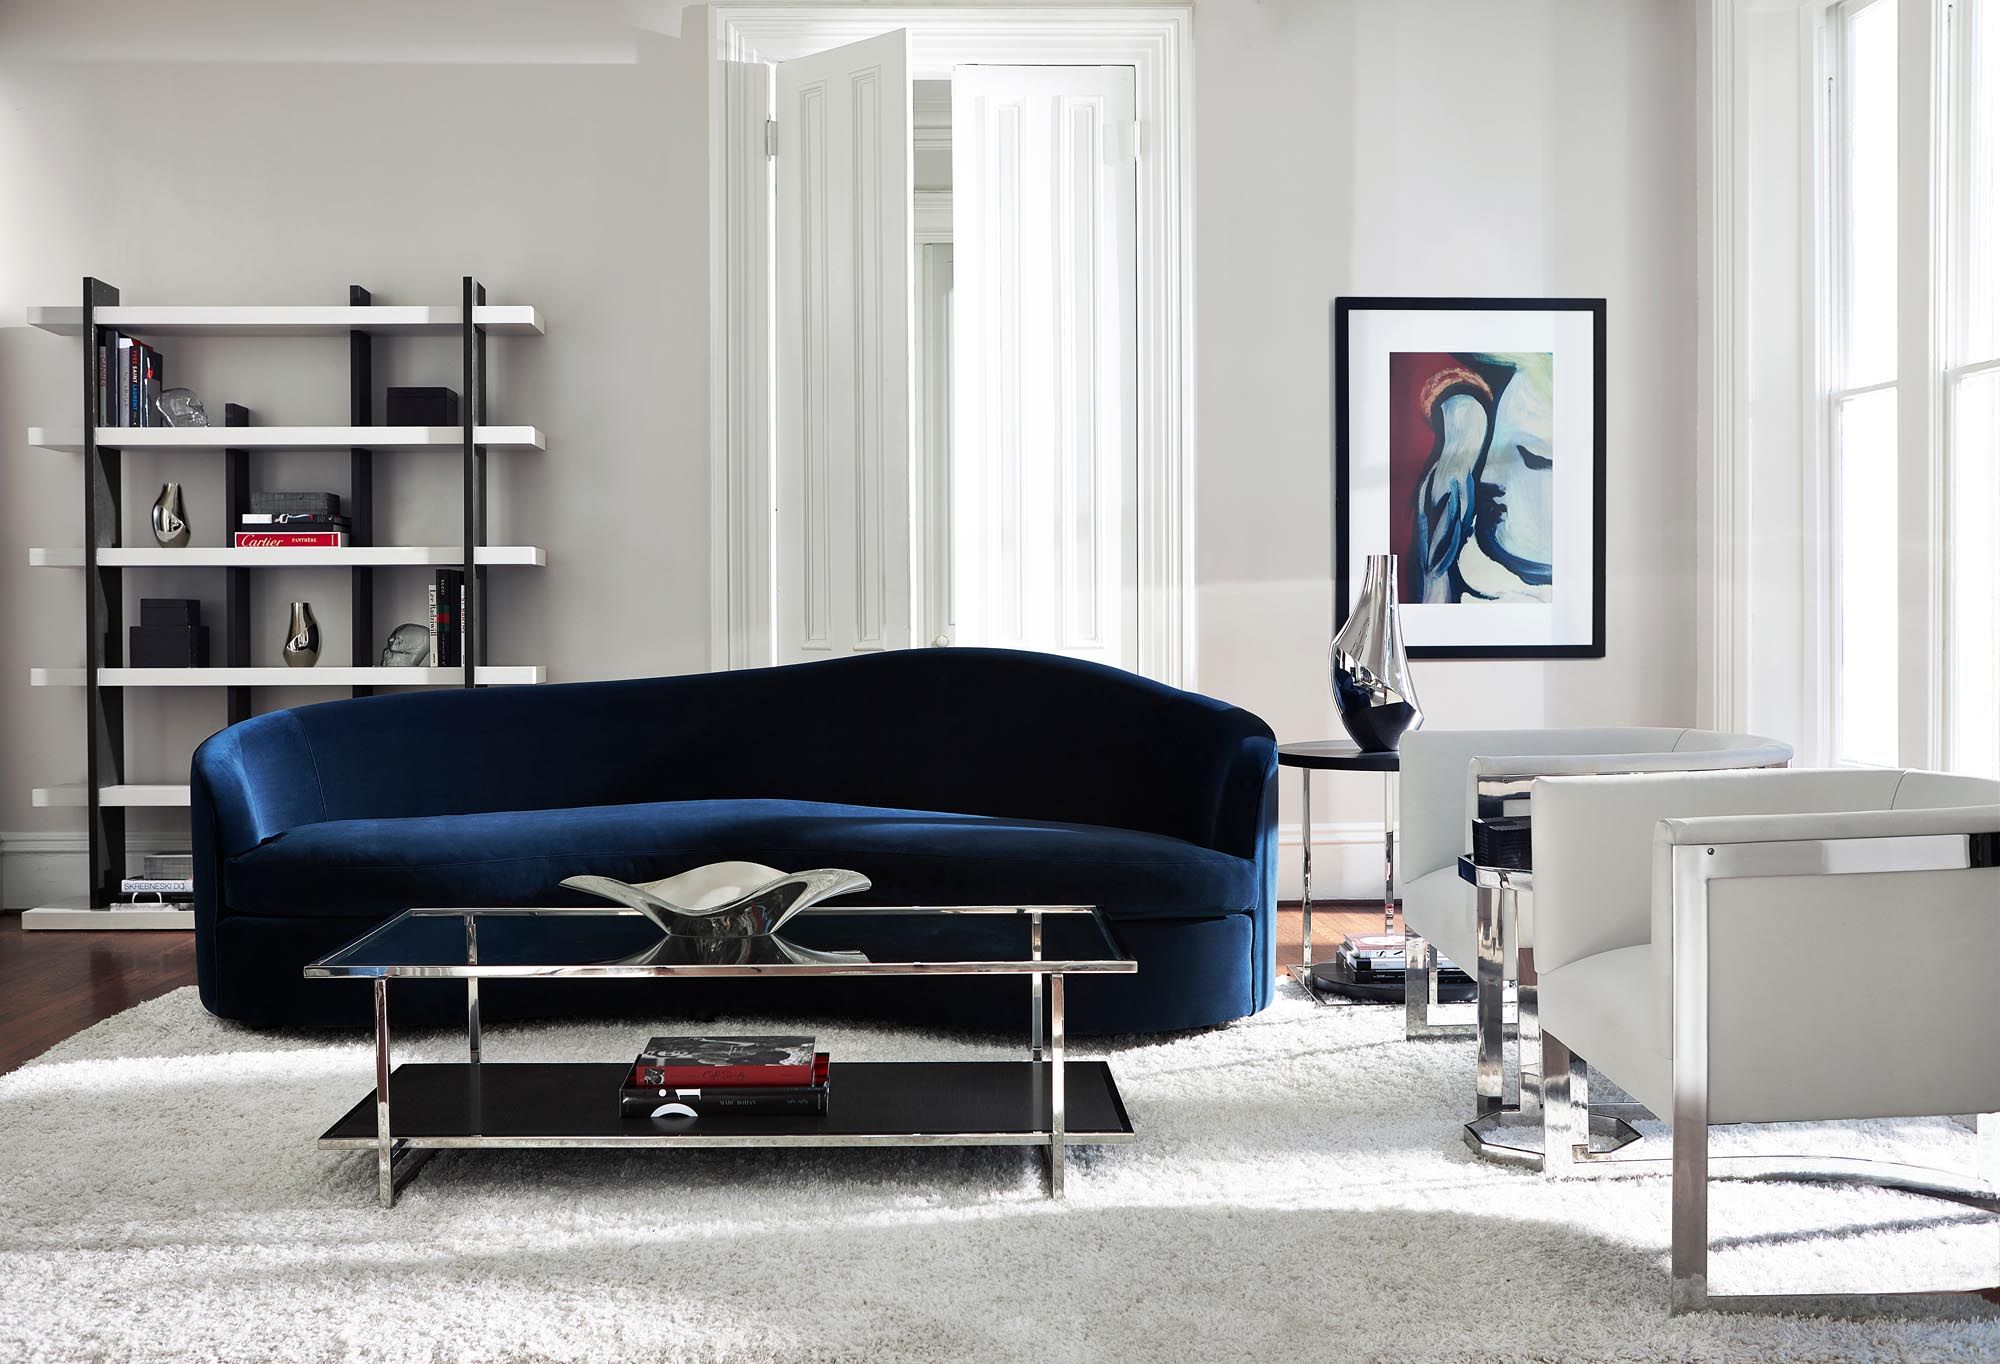 luxury-furniture-brands-bernhardt-1643148568.jpeg?resize\u003d480:*